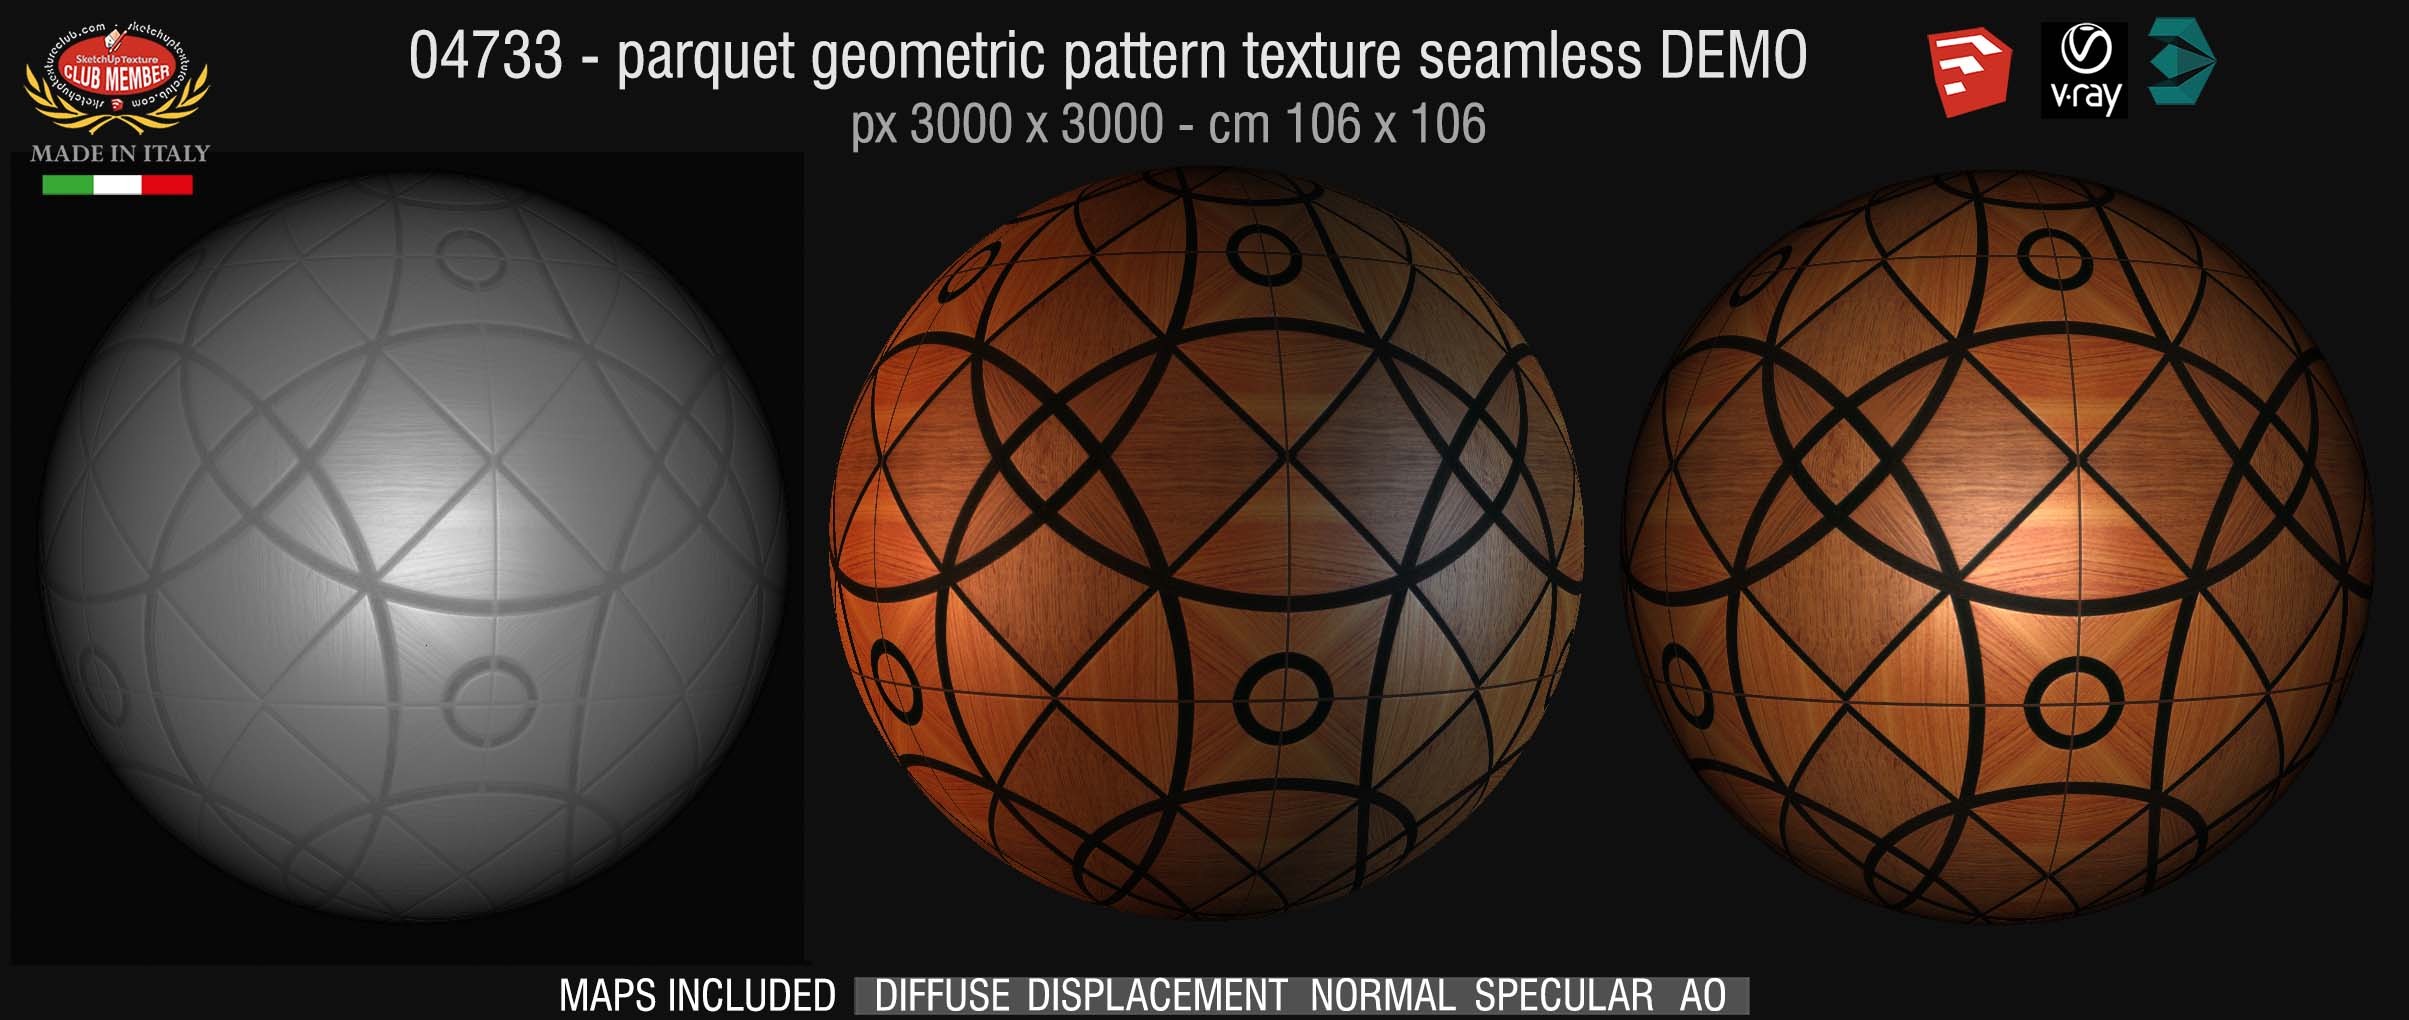 04733 HR Parquet geometric pattern texture seamless + maps DEMO